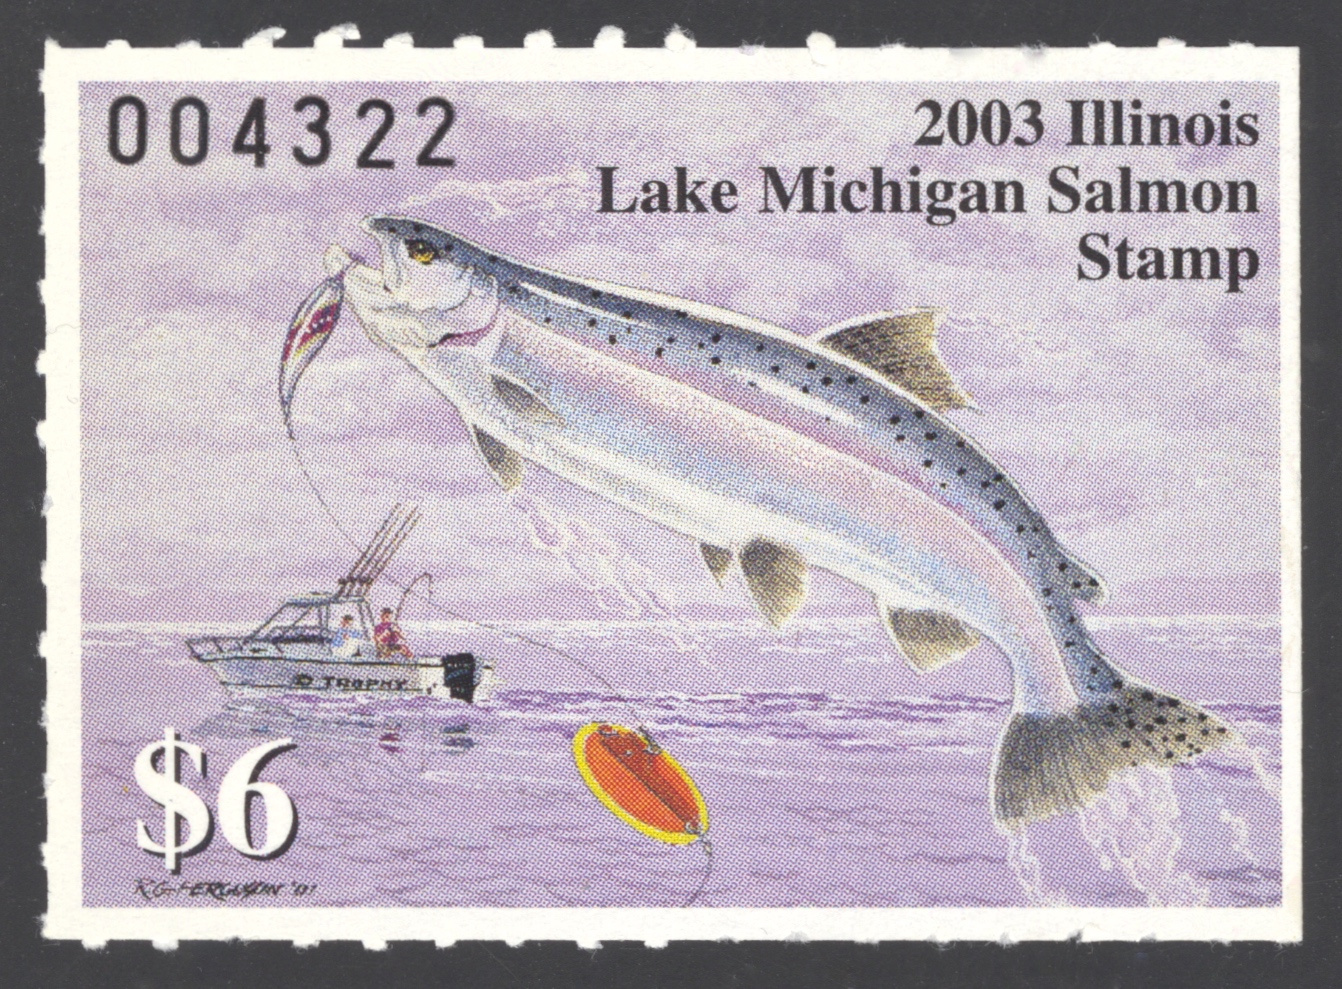 2003 Illinois Lake Michigan Salmon